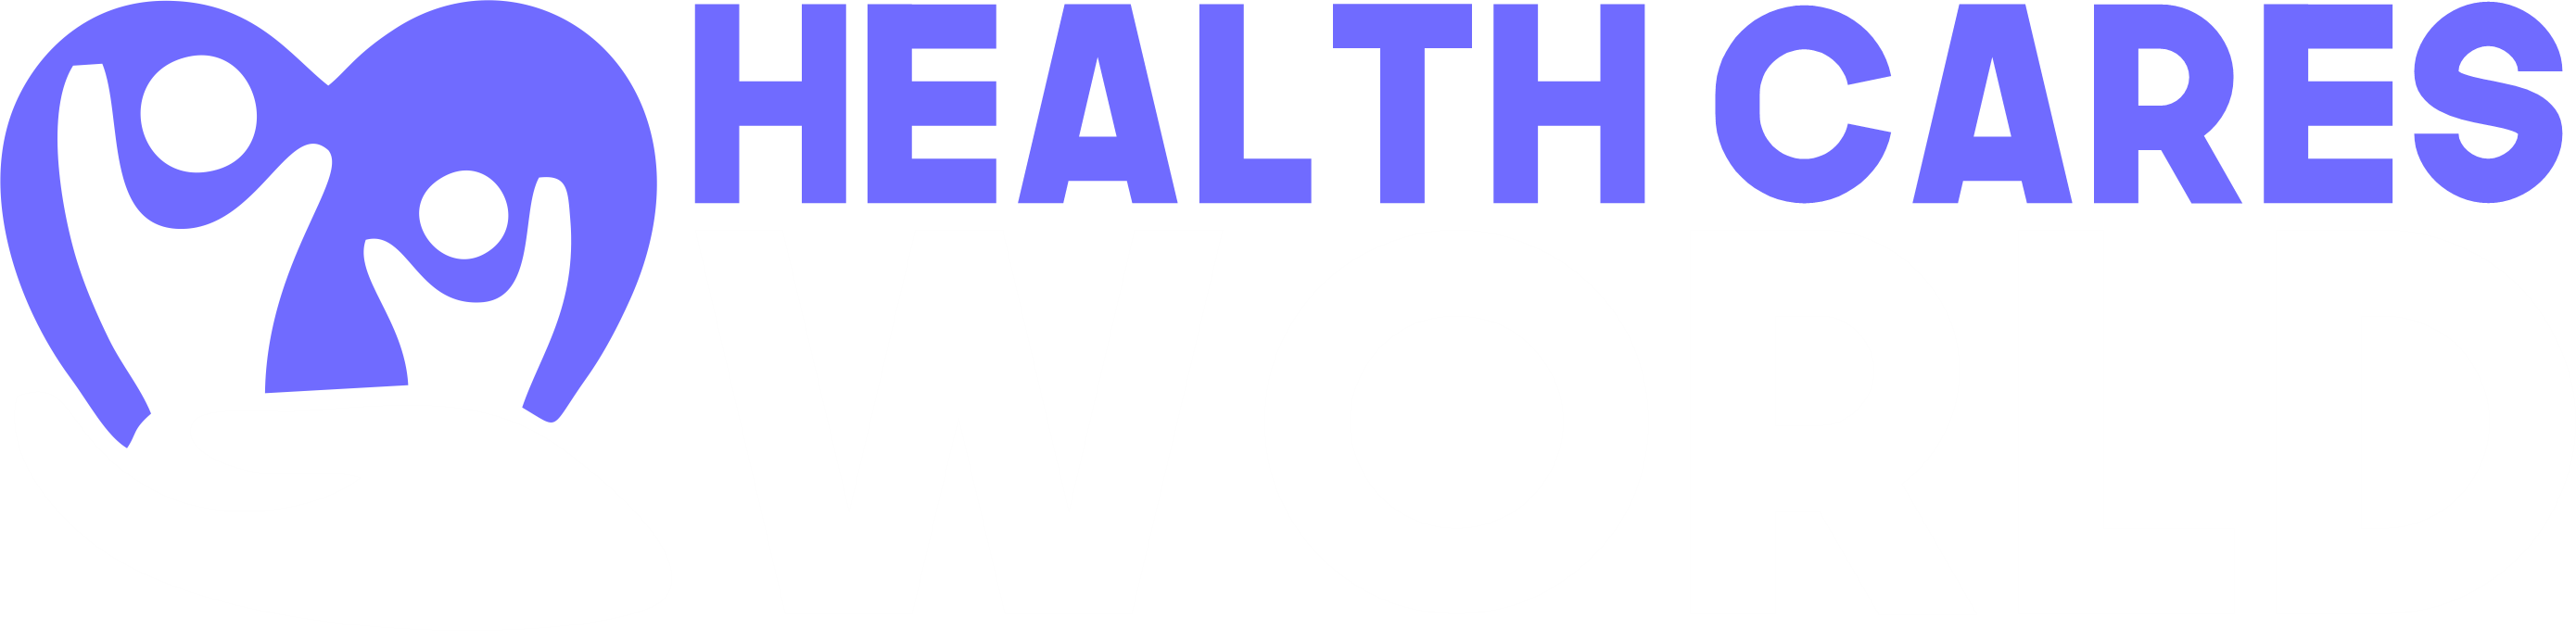 Health Cares World